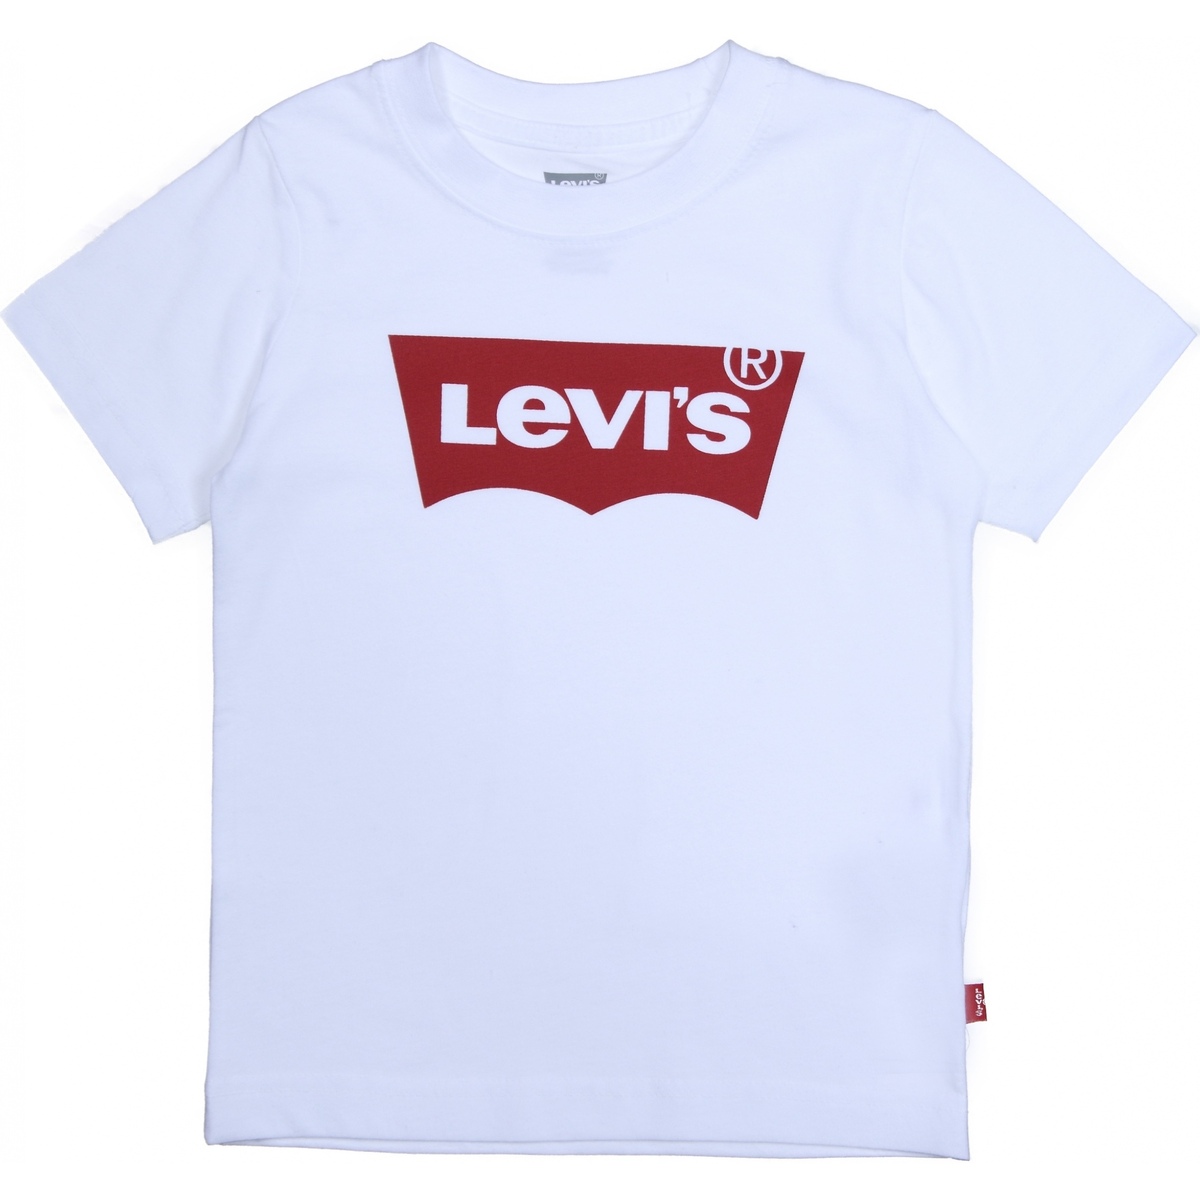 Vêtements Garçon T-shirts manches courtes Levi's Tee Shirt Garçon logotypé Blanc